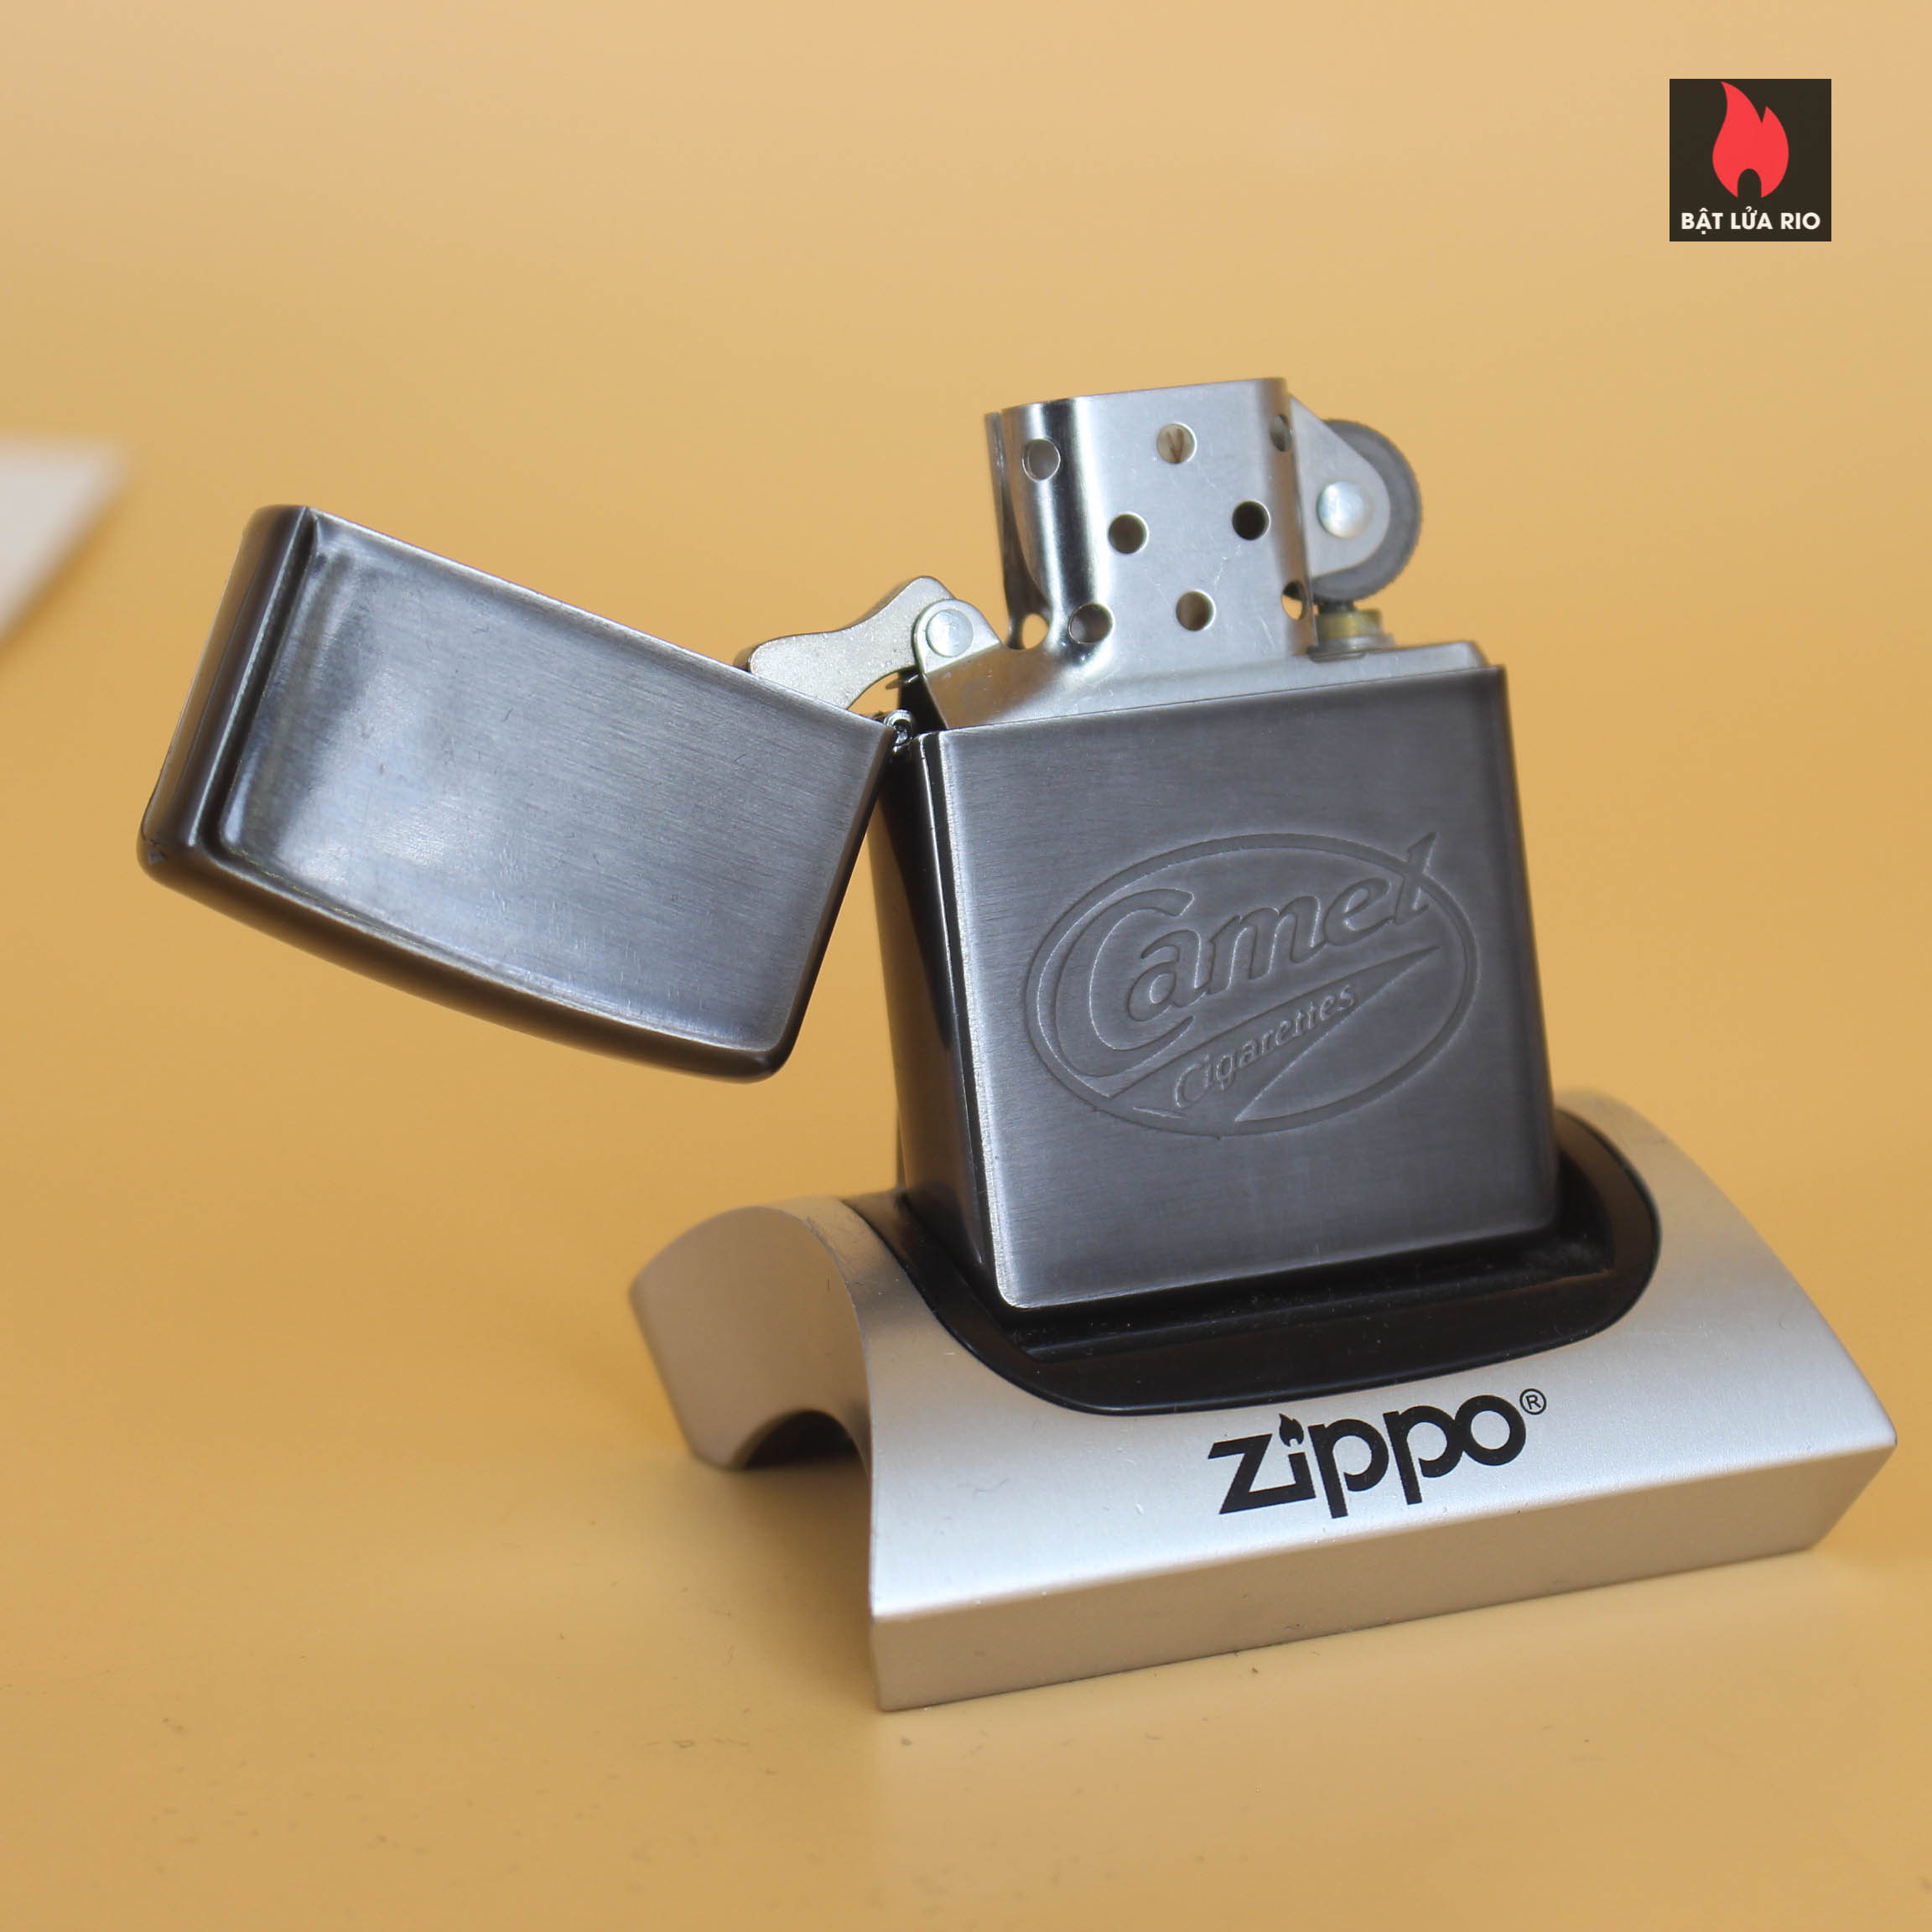 Zippo La Mã 1997 – Zippo Table Set – Camel Barbara Table Lighter 15